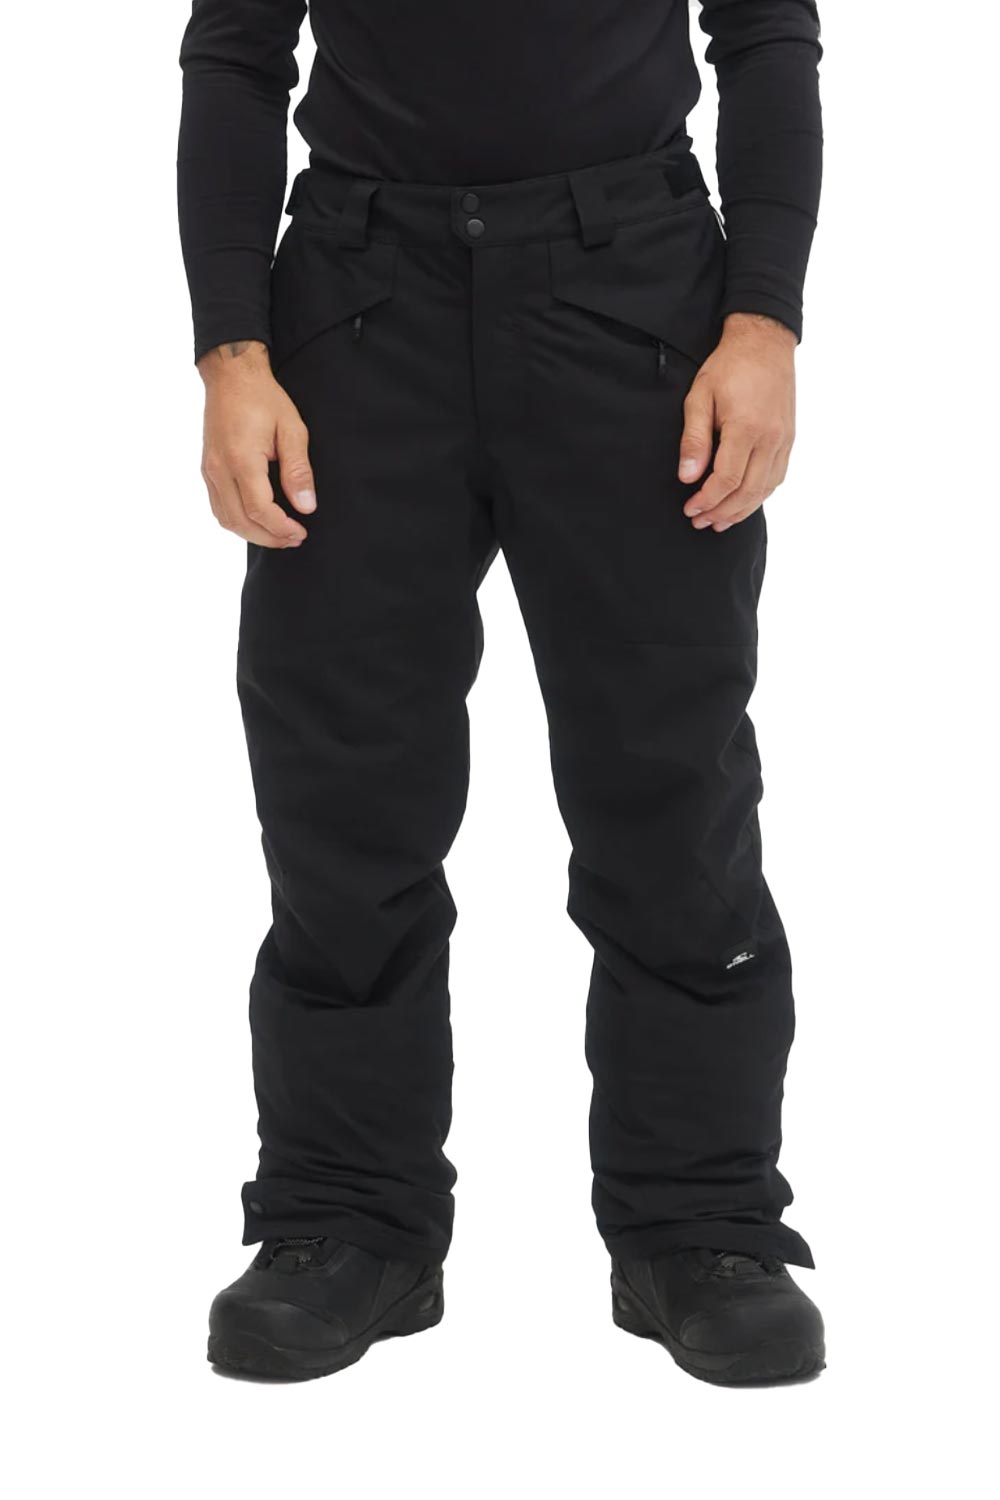 men's O'Neill snowboard pants, black